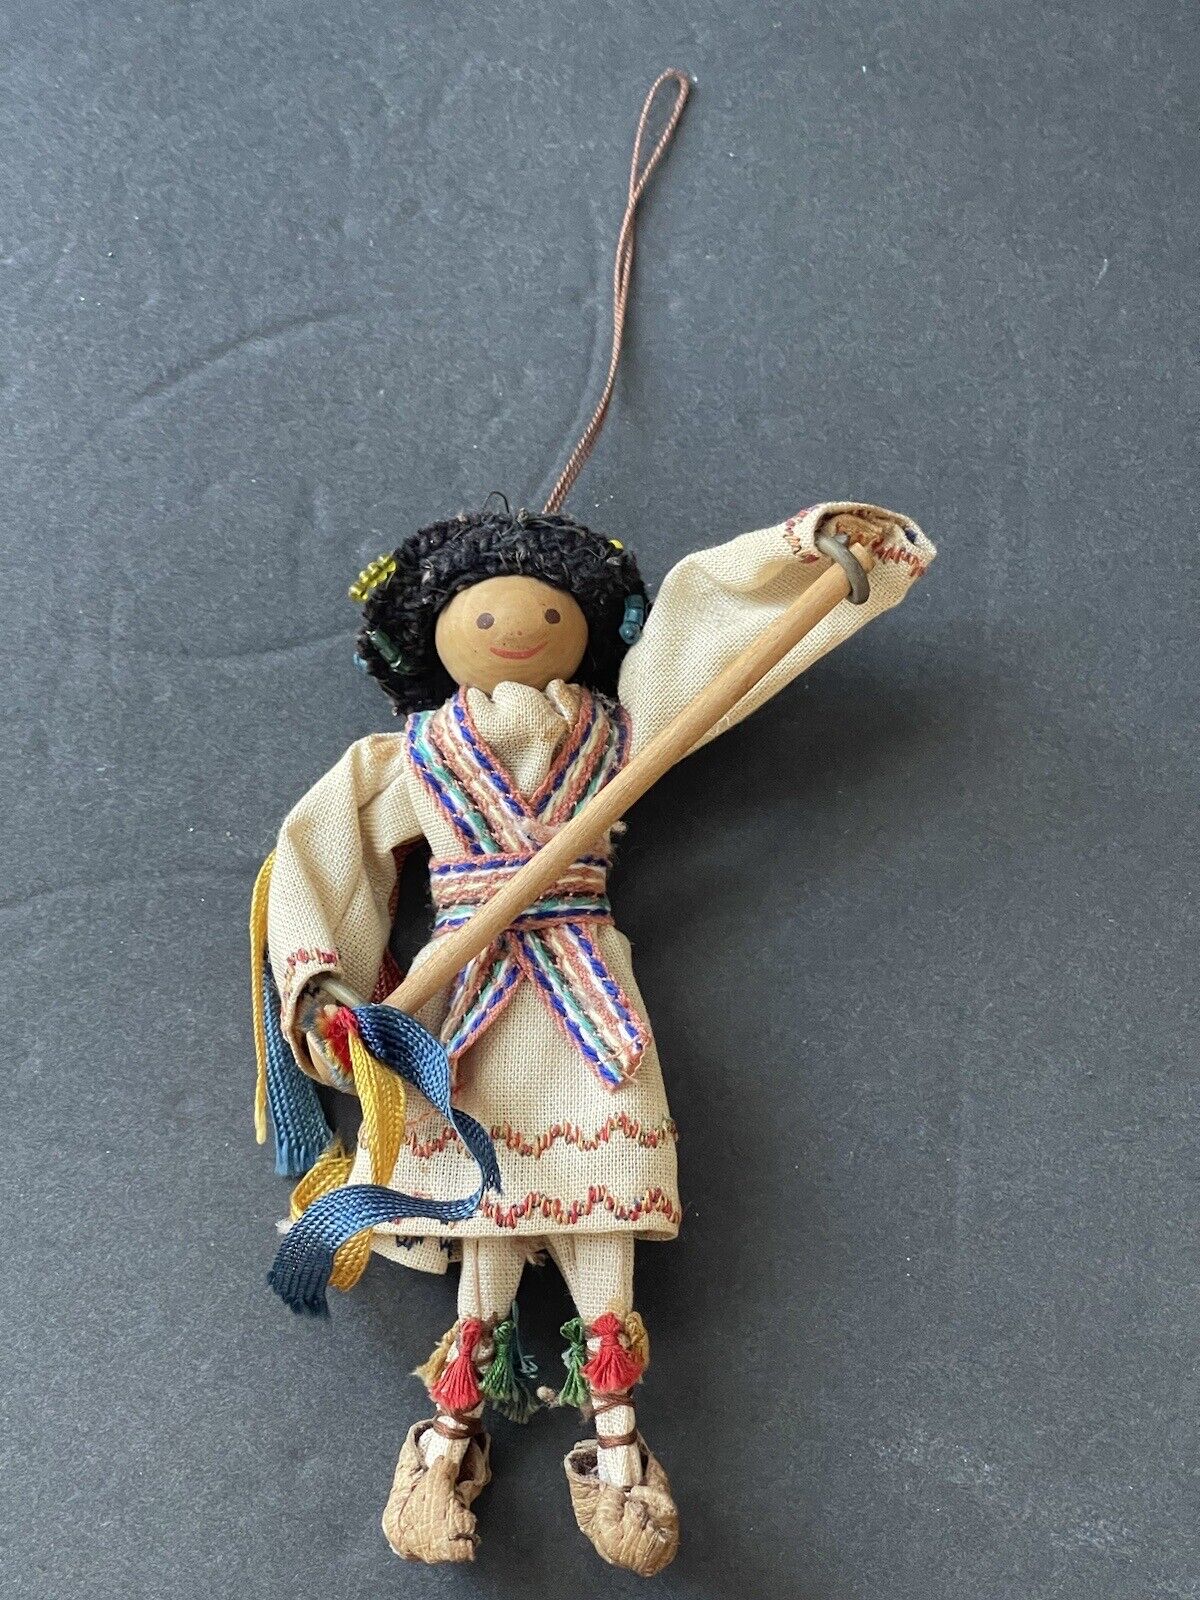 Vintage Folk Art Holiday Christmas Handcrafted Figurine Ornament